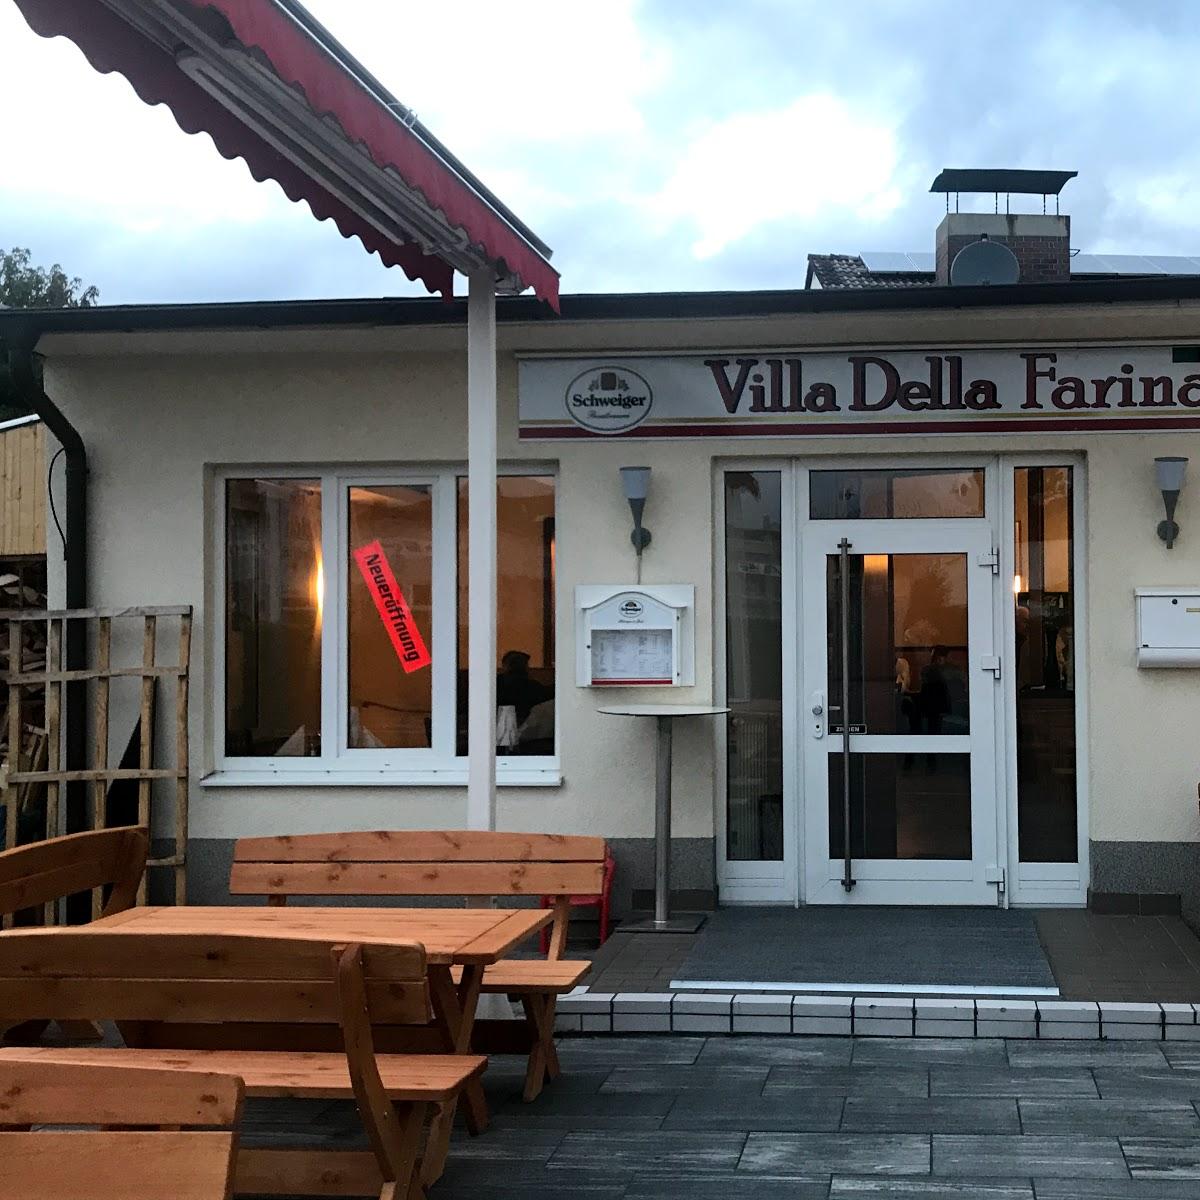 Restaurant "Villa della Farina Holzofenpizza" in  Germering